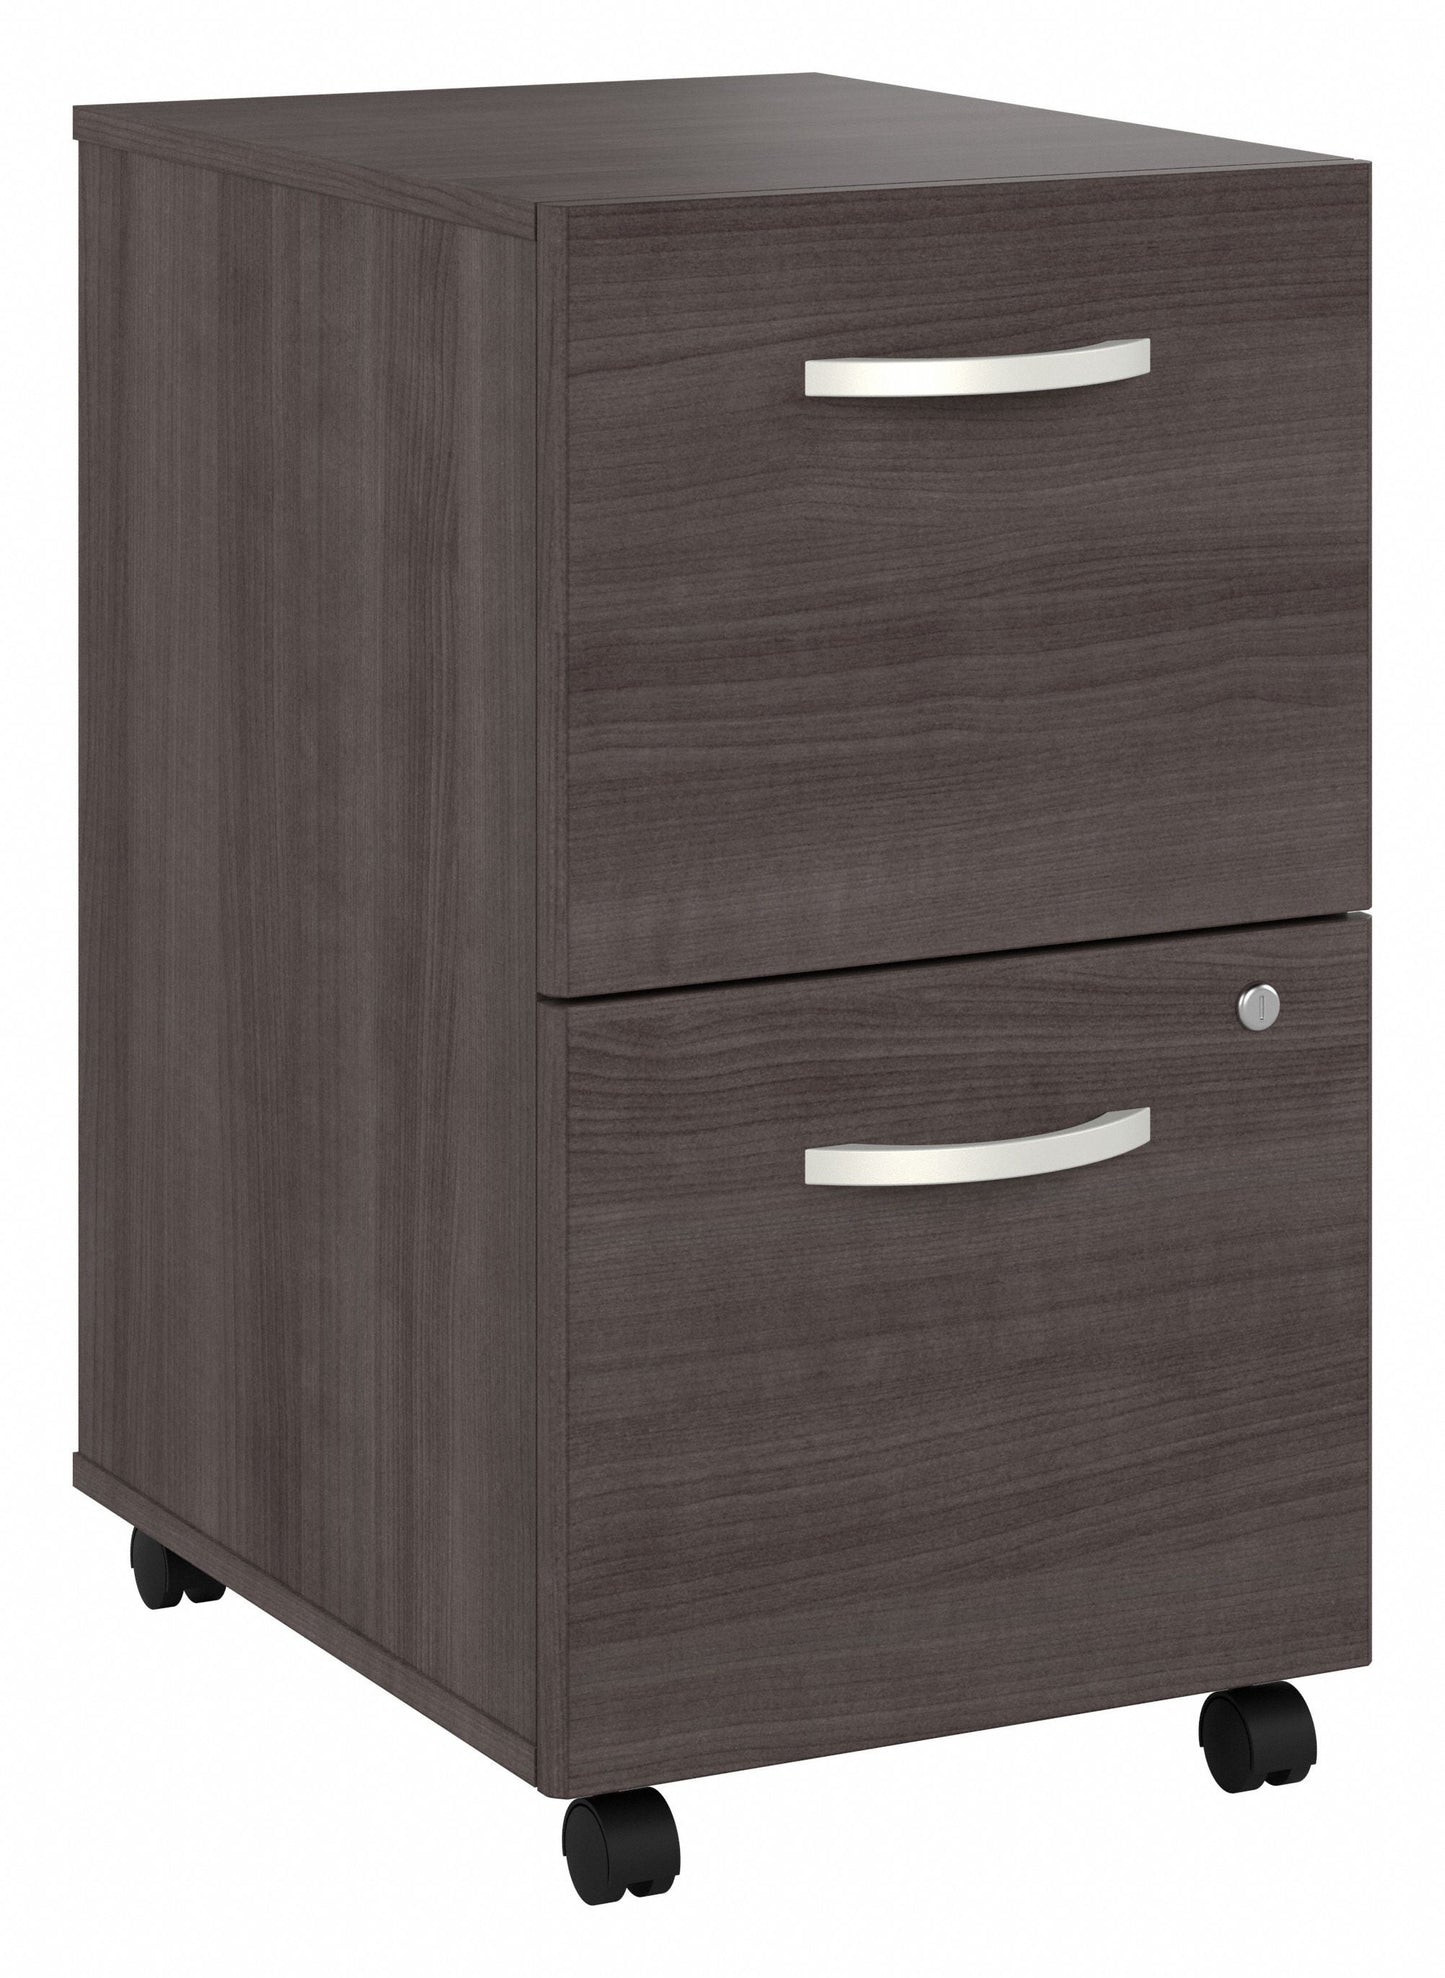 Bush Business Furniture Hybrid 2 Drawer Mobile File Cabinet in Storm Gray - Assembled